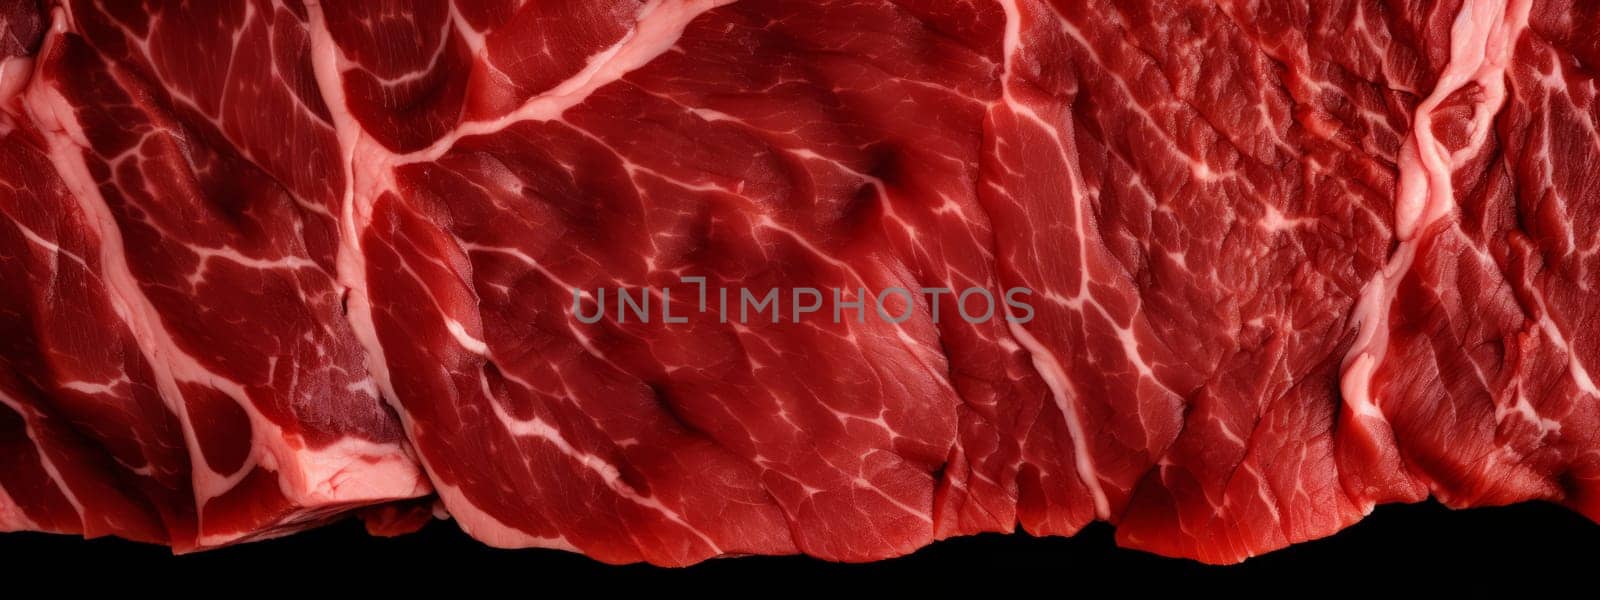 realistic red meat steak texture. 3d raw meat background. Cow cut steak pattern